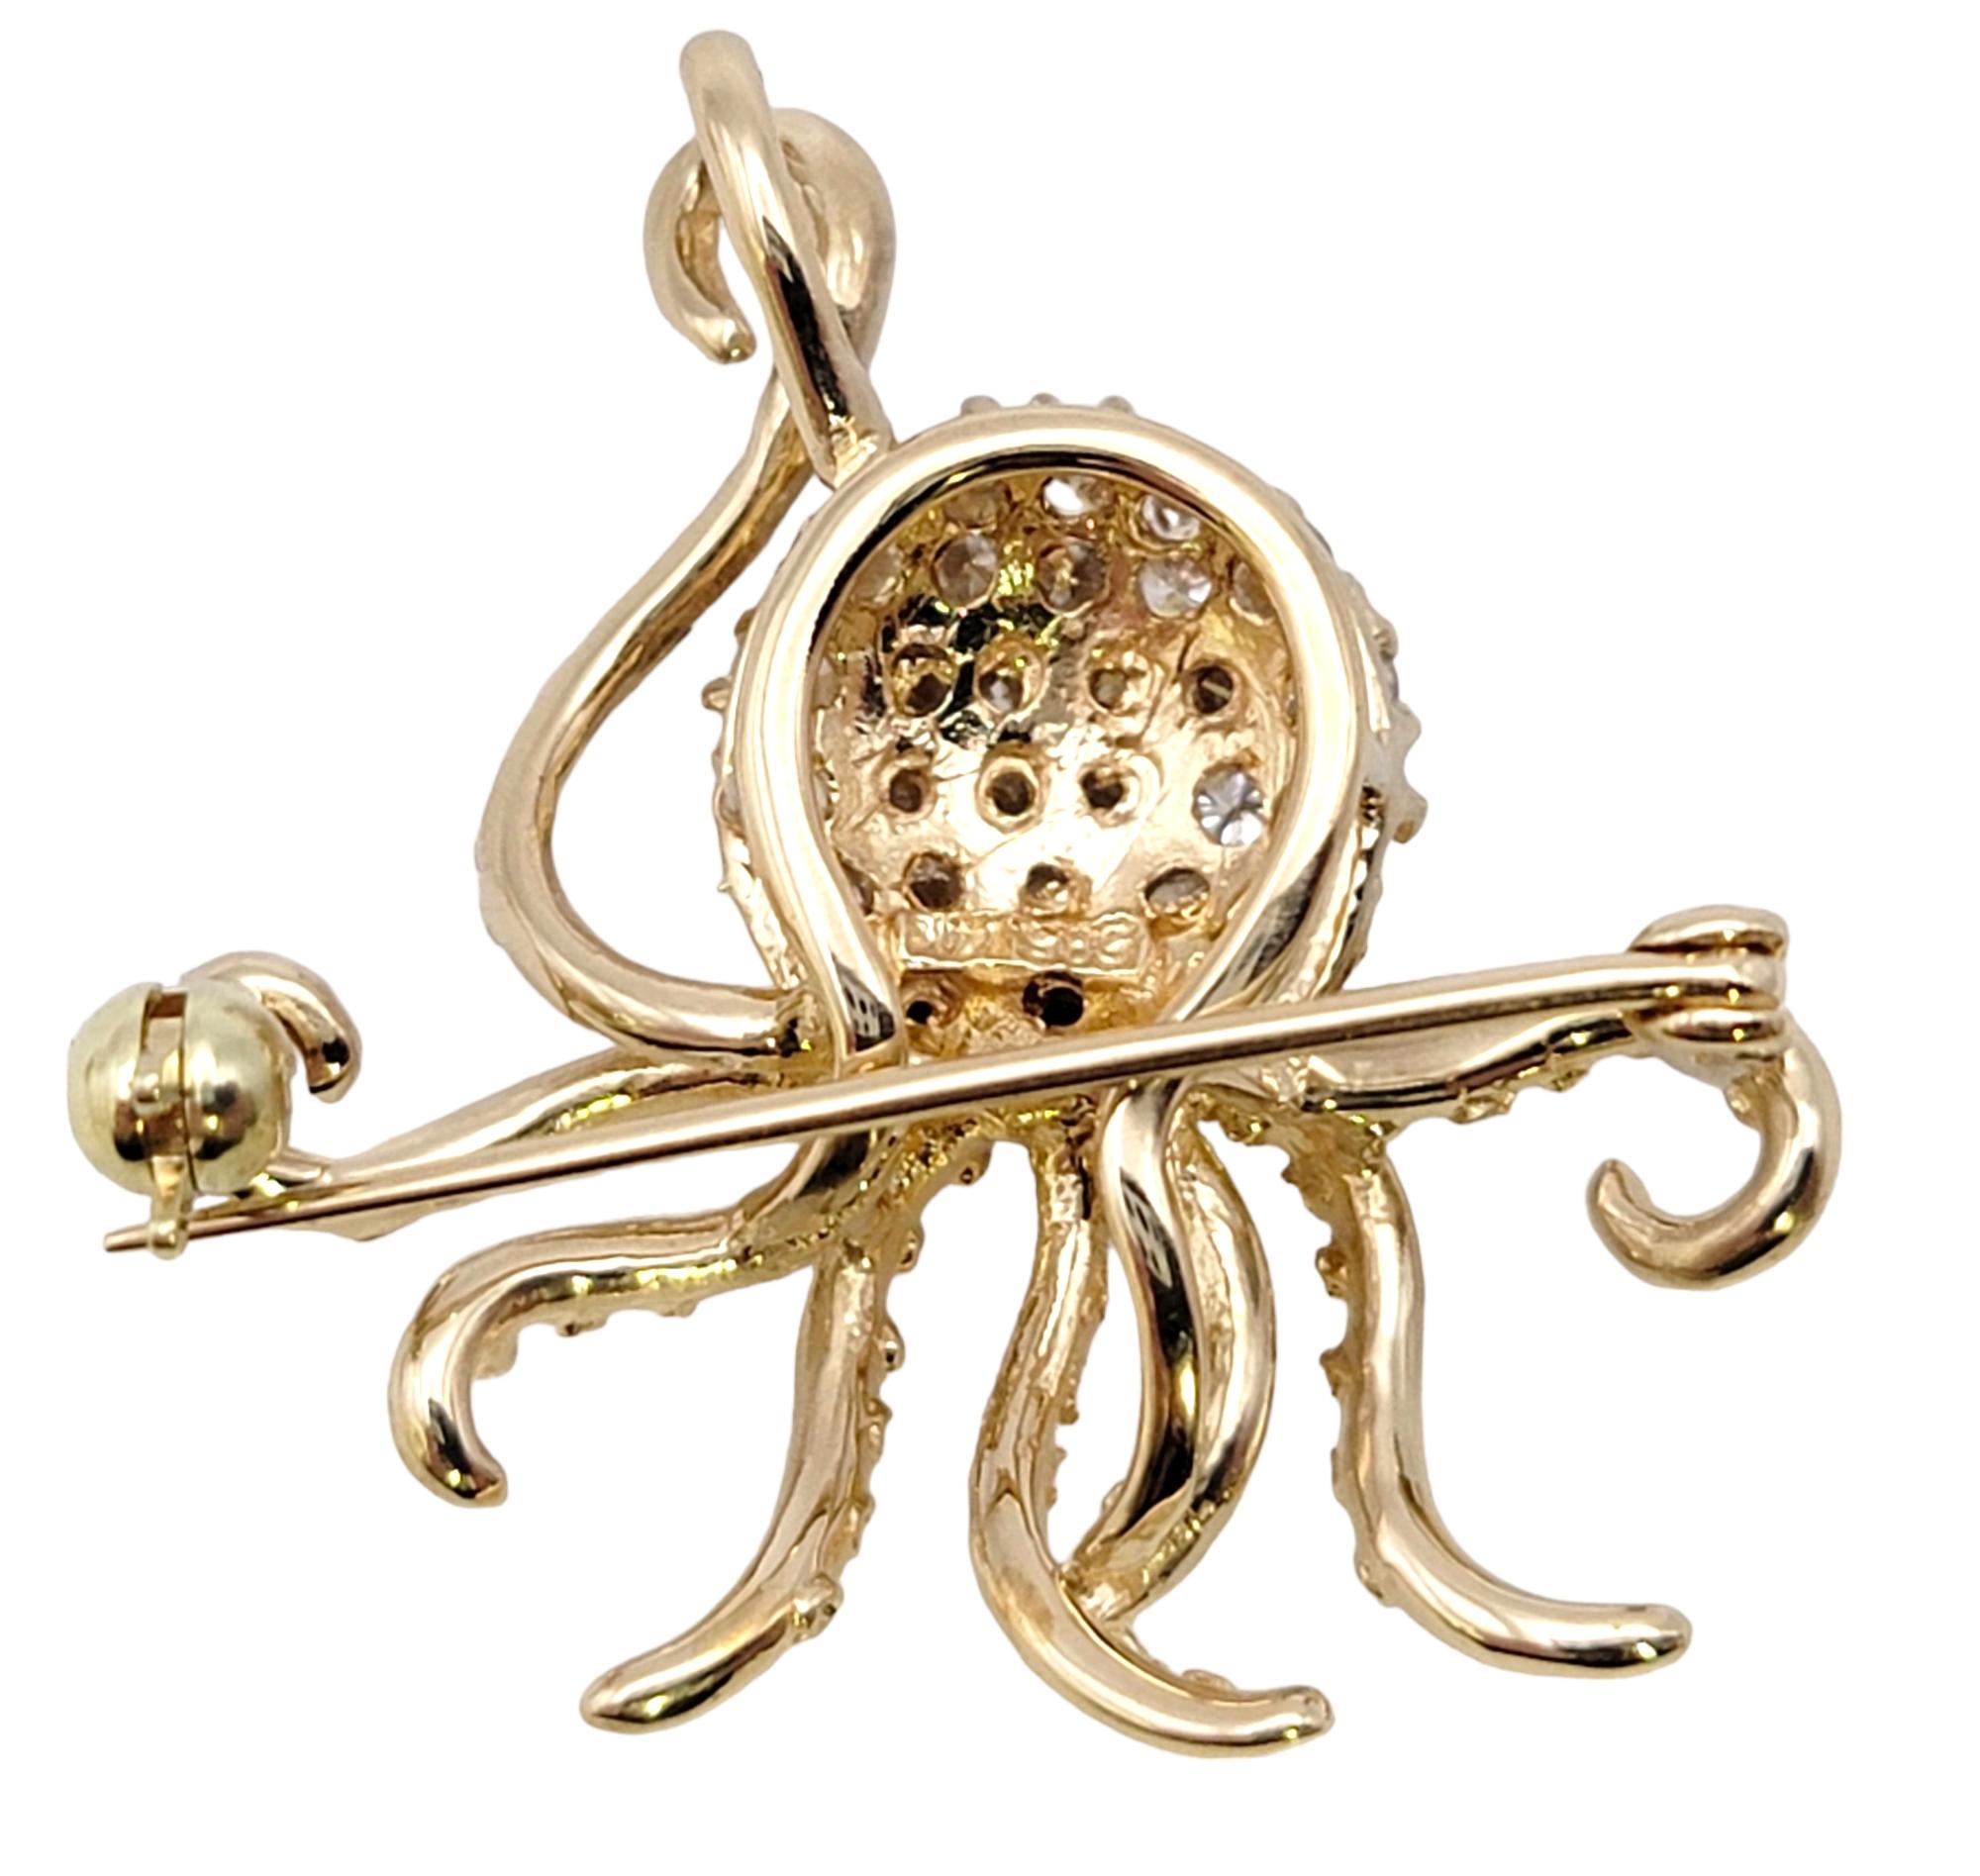 Delightful 14 Karat Polished Yellow Gold Octopus Brooch / Pendant with Diamonds 2